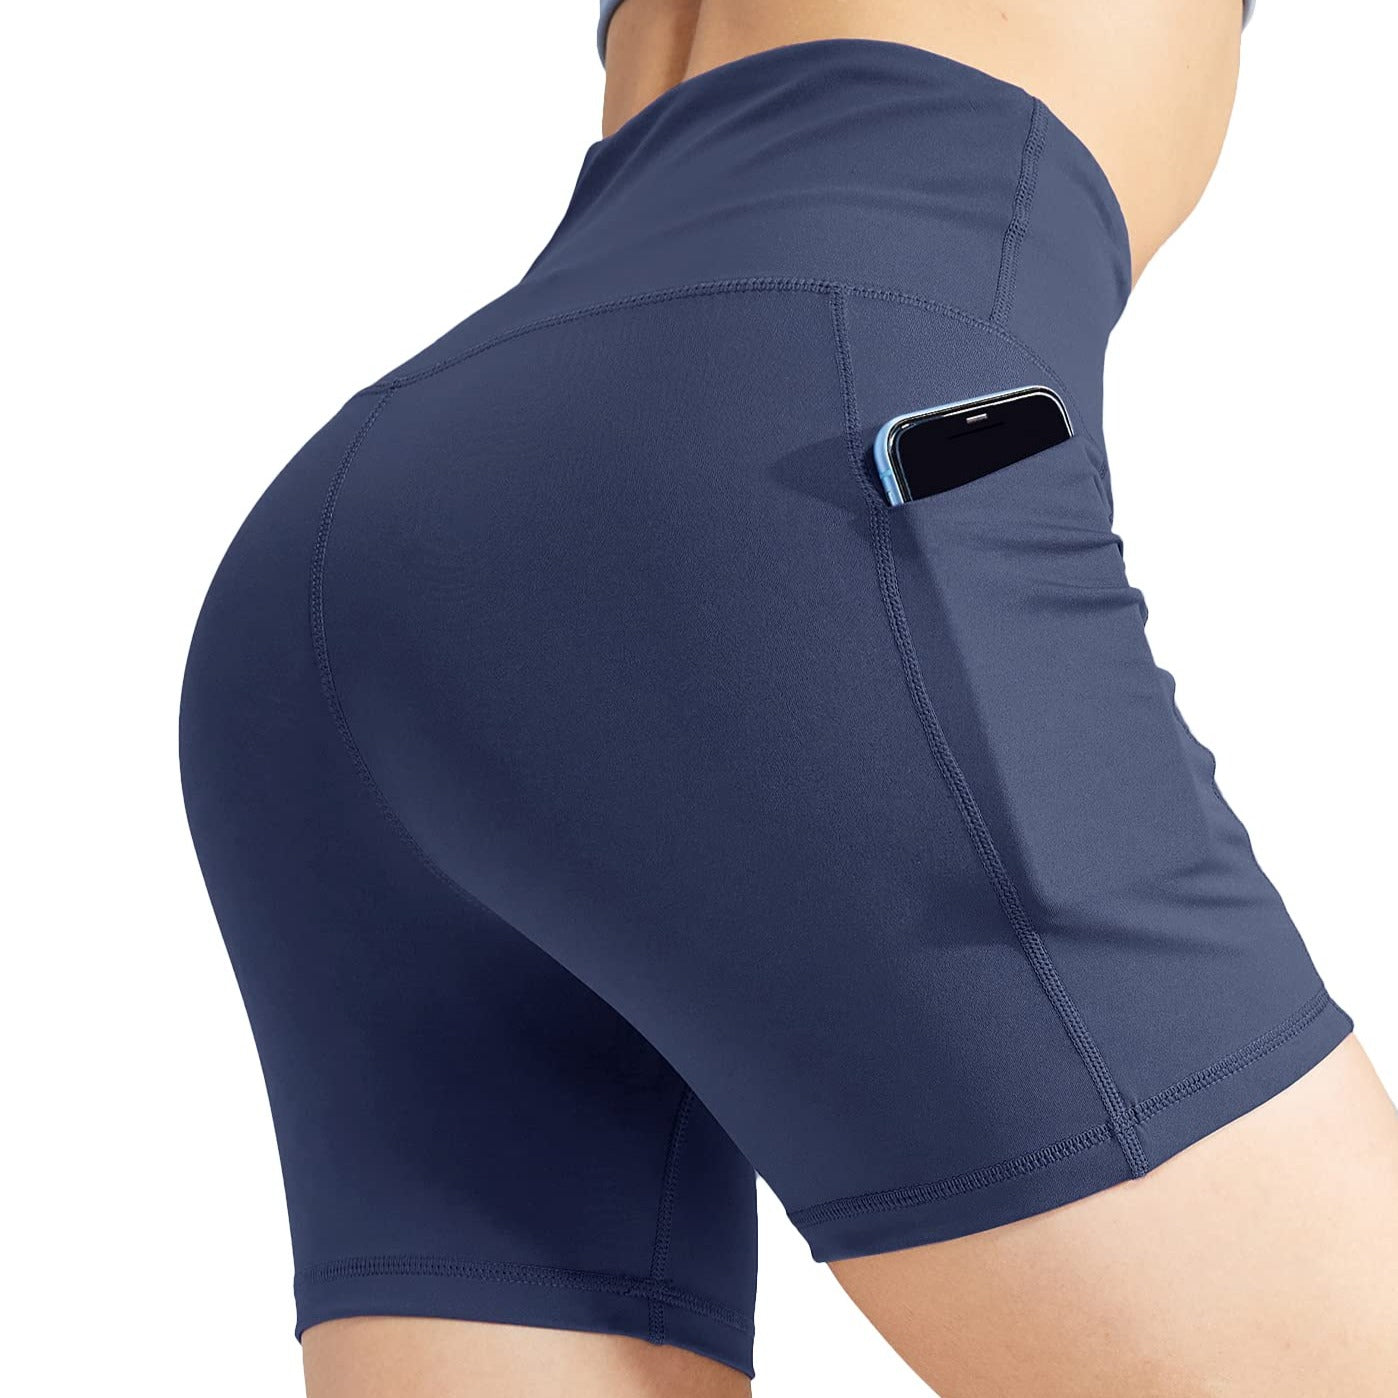 Women's High Waist Yoga Tummy Control Shorts, 5 Inch - Navy / S